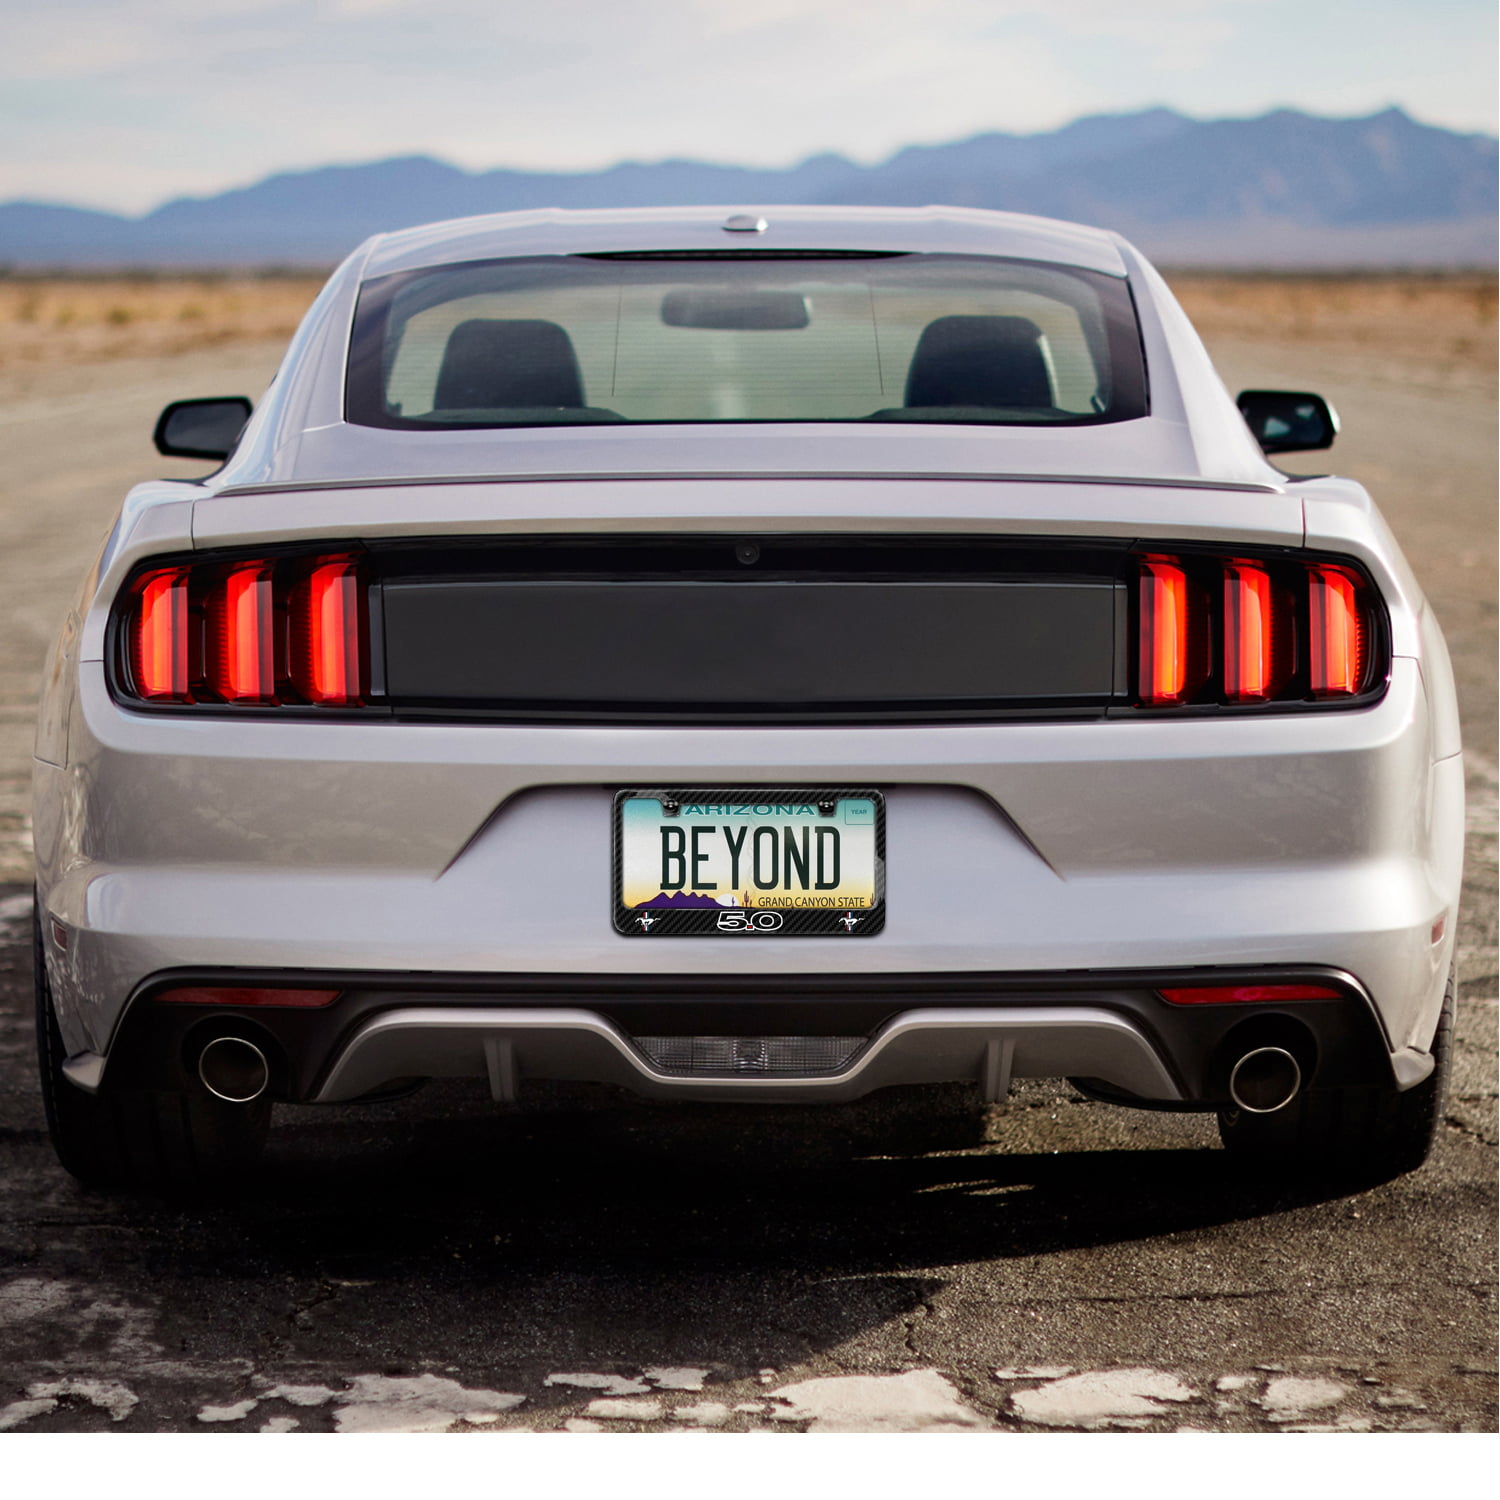 Made in USA Ford Mustang 3d Chrome Emblem Black Carbon Fiber License Plate Fram